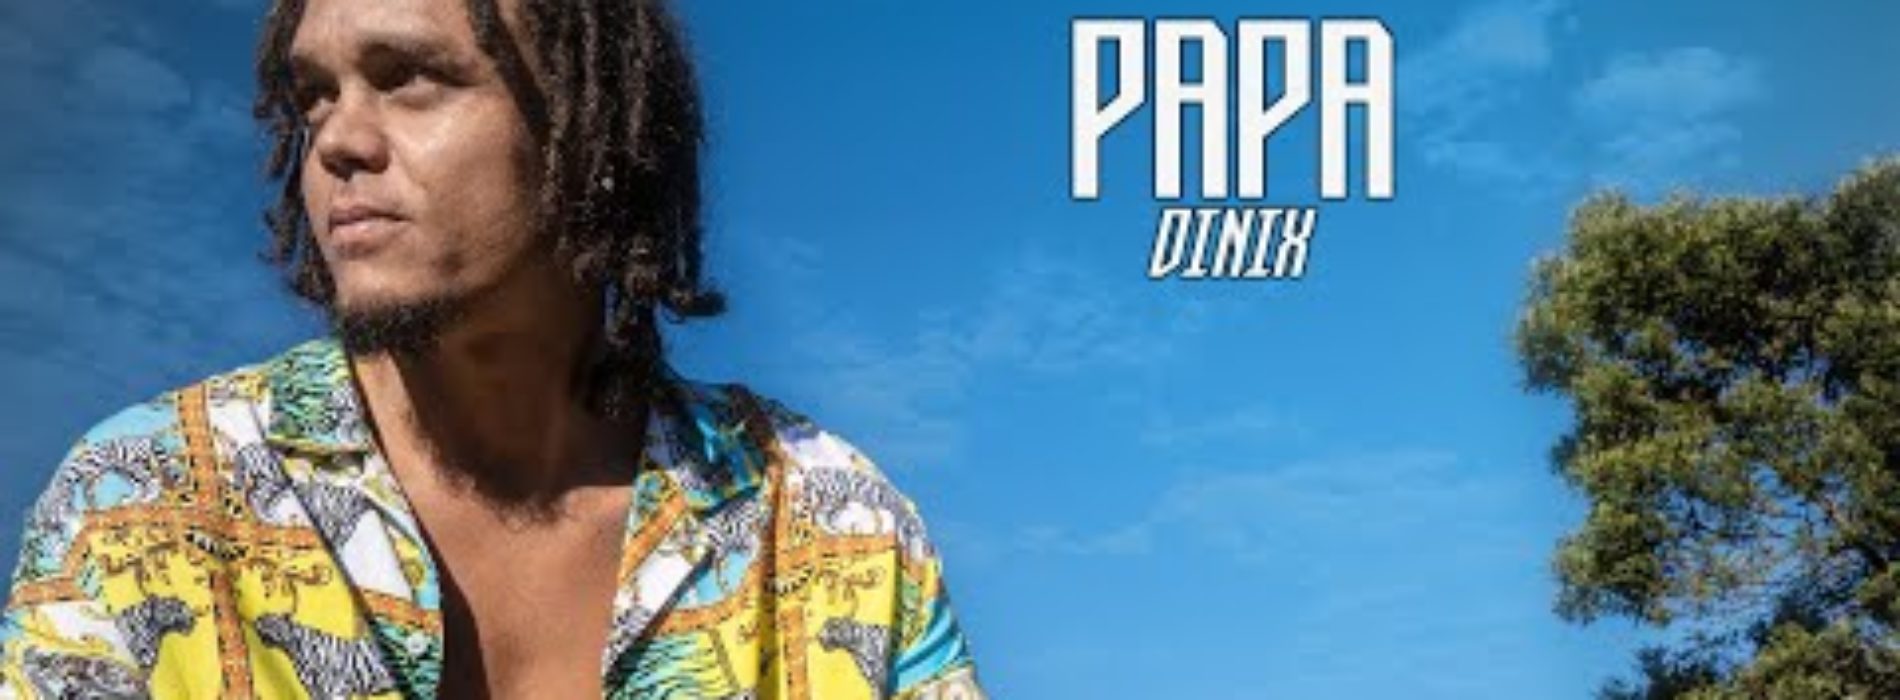 Dinix – Papa (Acoustique) (HulkRecord) – Juin 2020